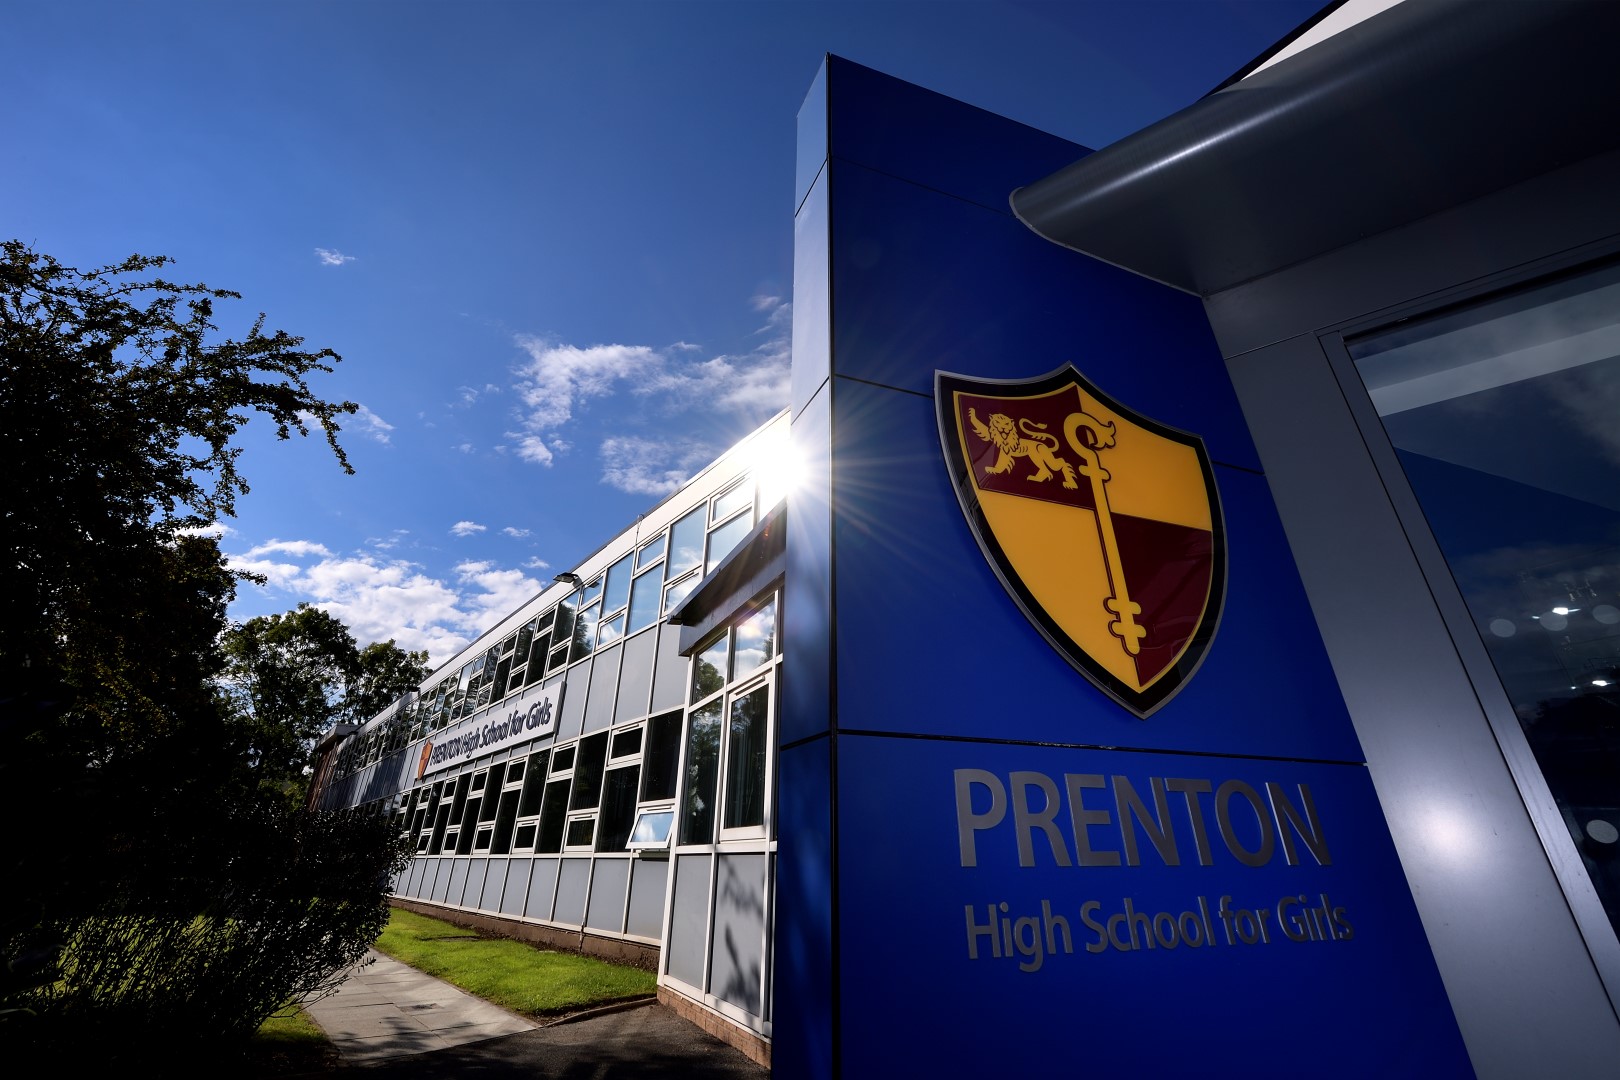 Prenton High School for Girls